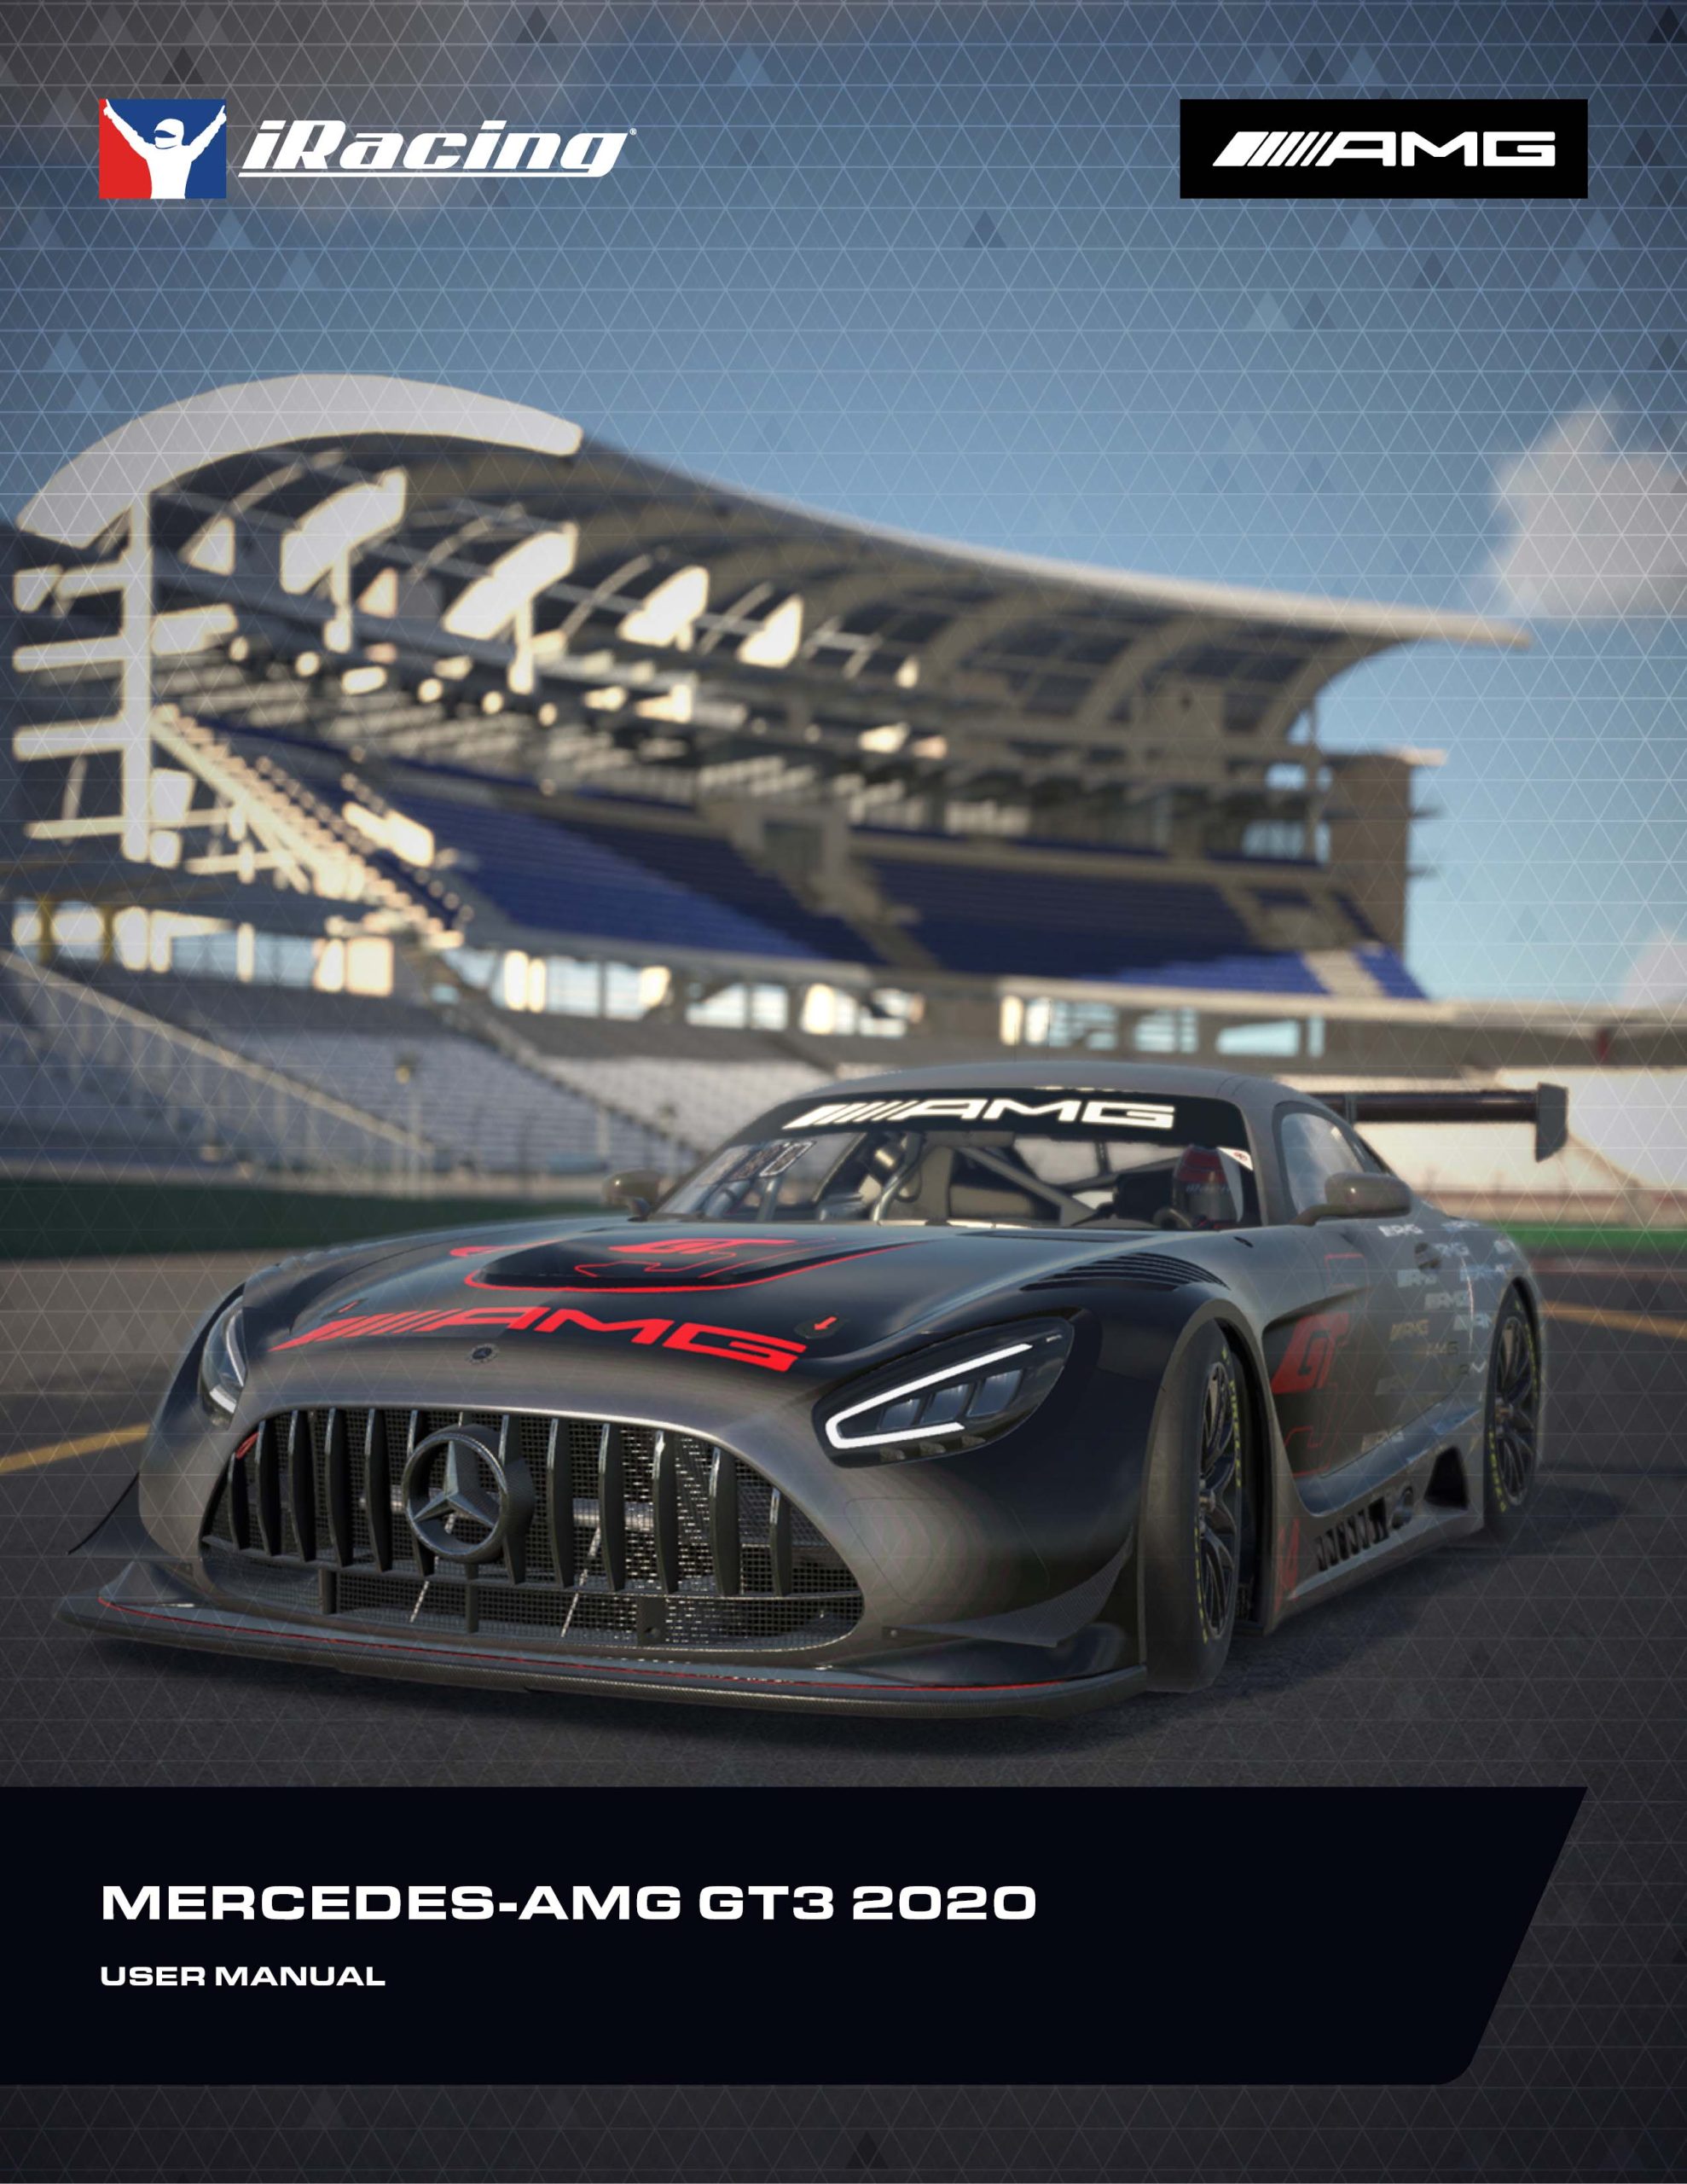 Mercedes-AMG GT3 2020 User Manual